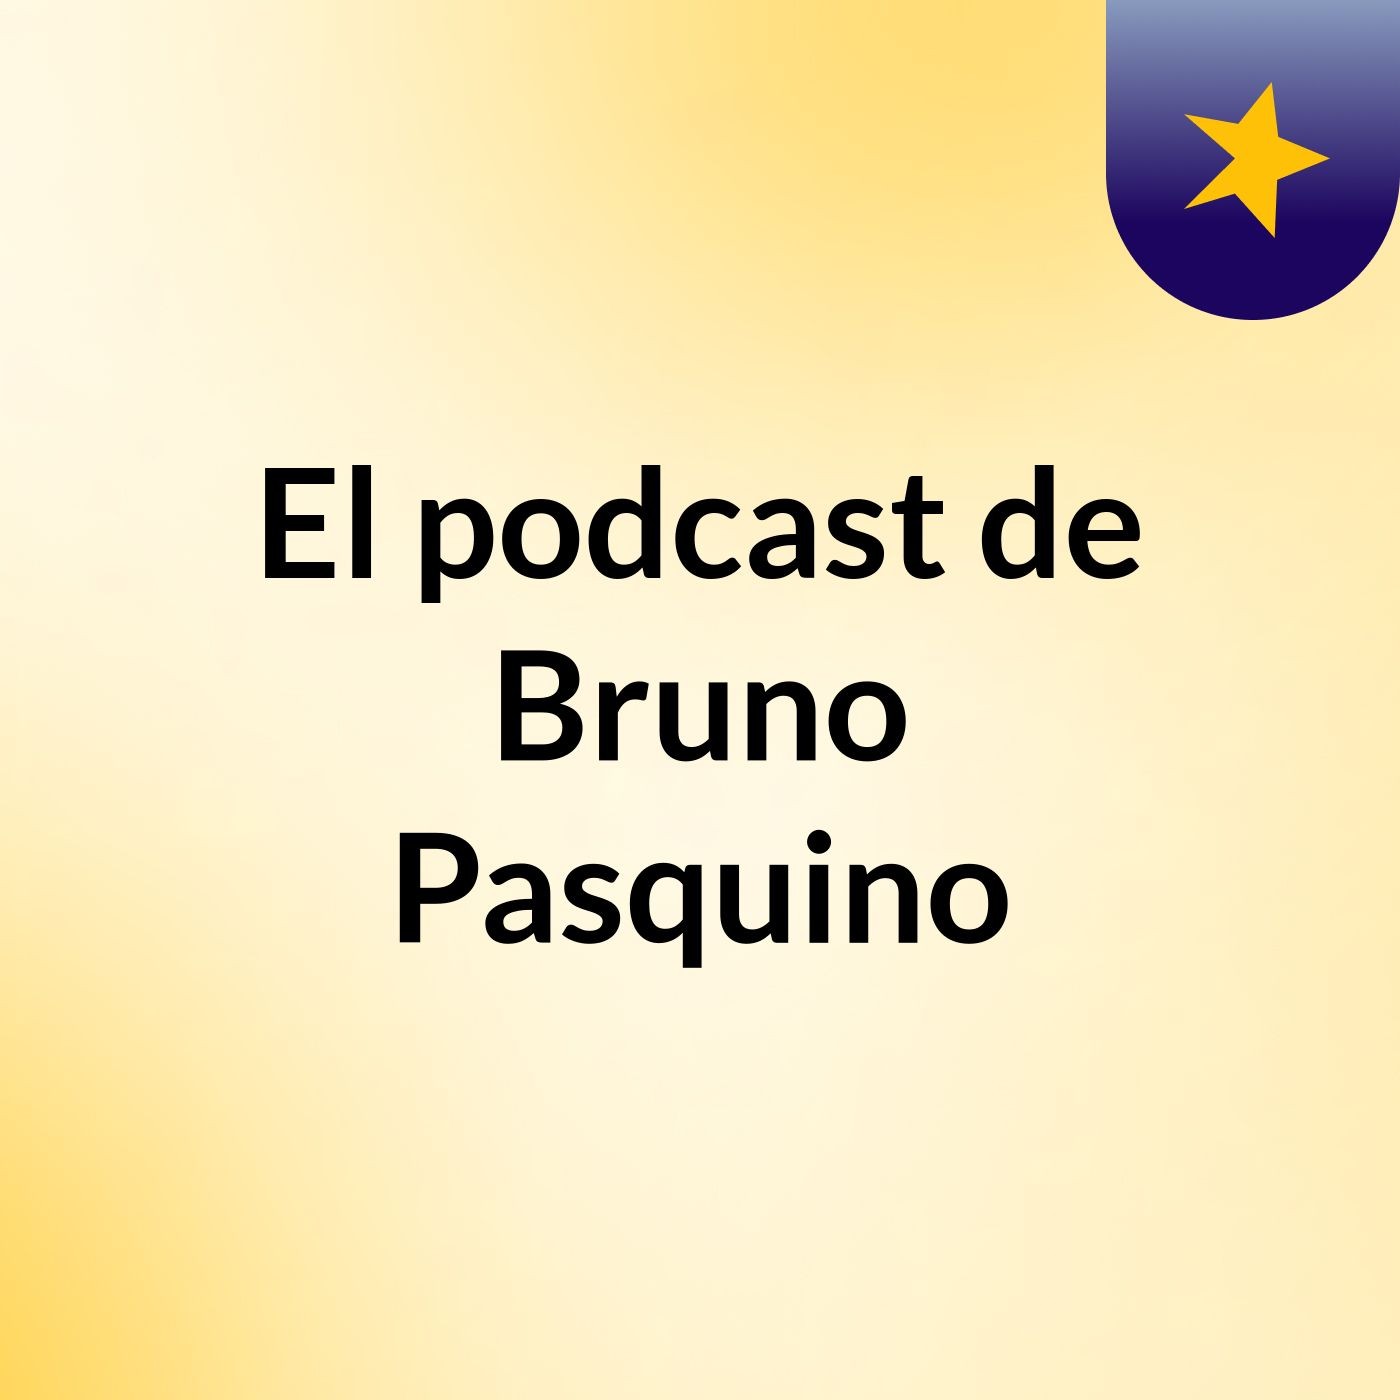 El podcast de Bruno Pasquino